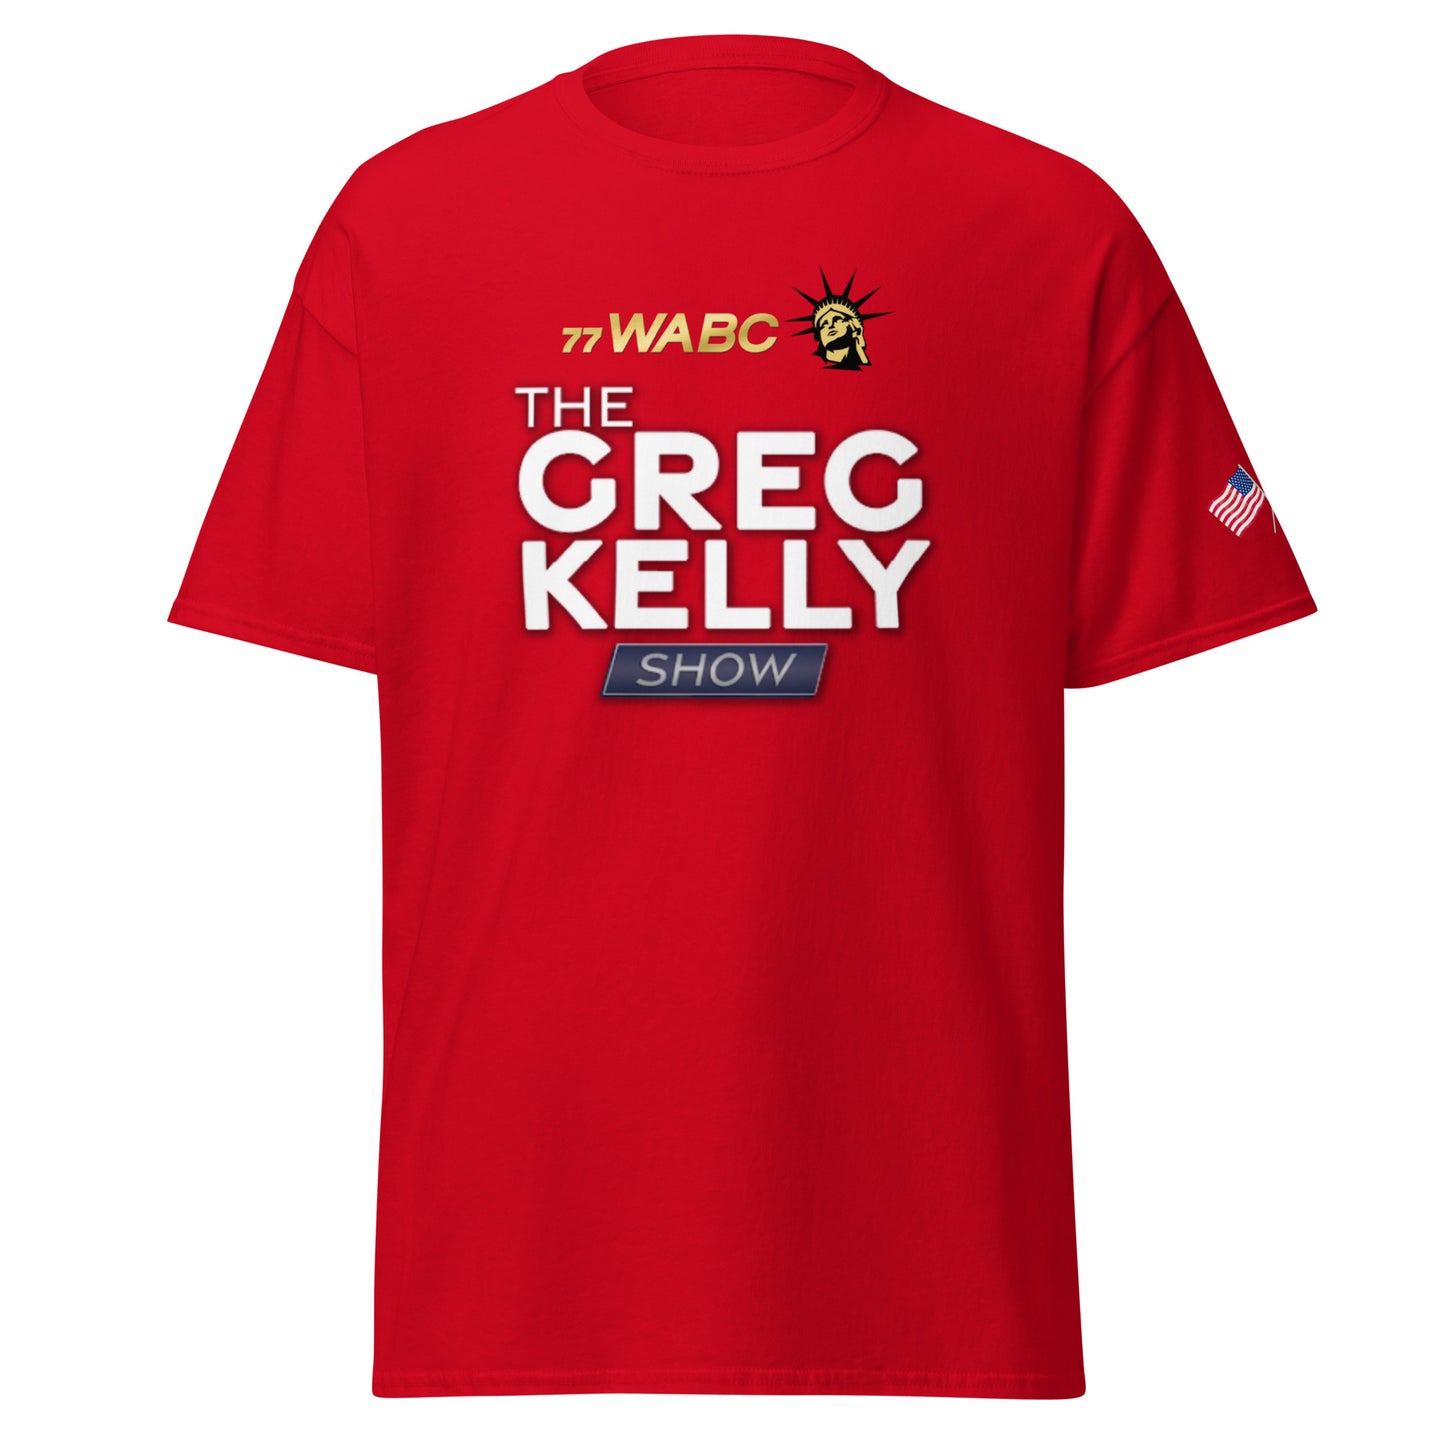 The Greg Kelly School classic tee